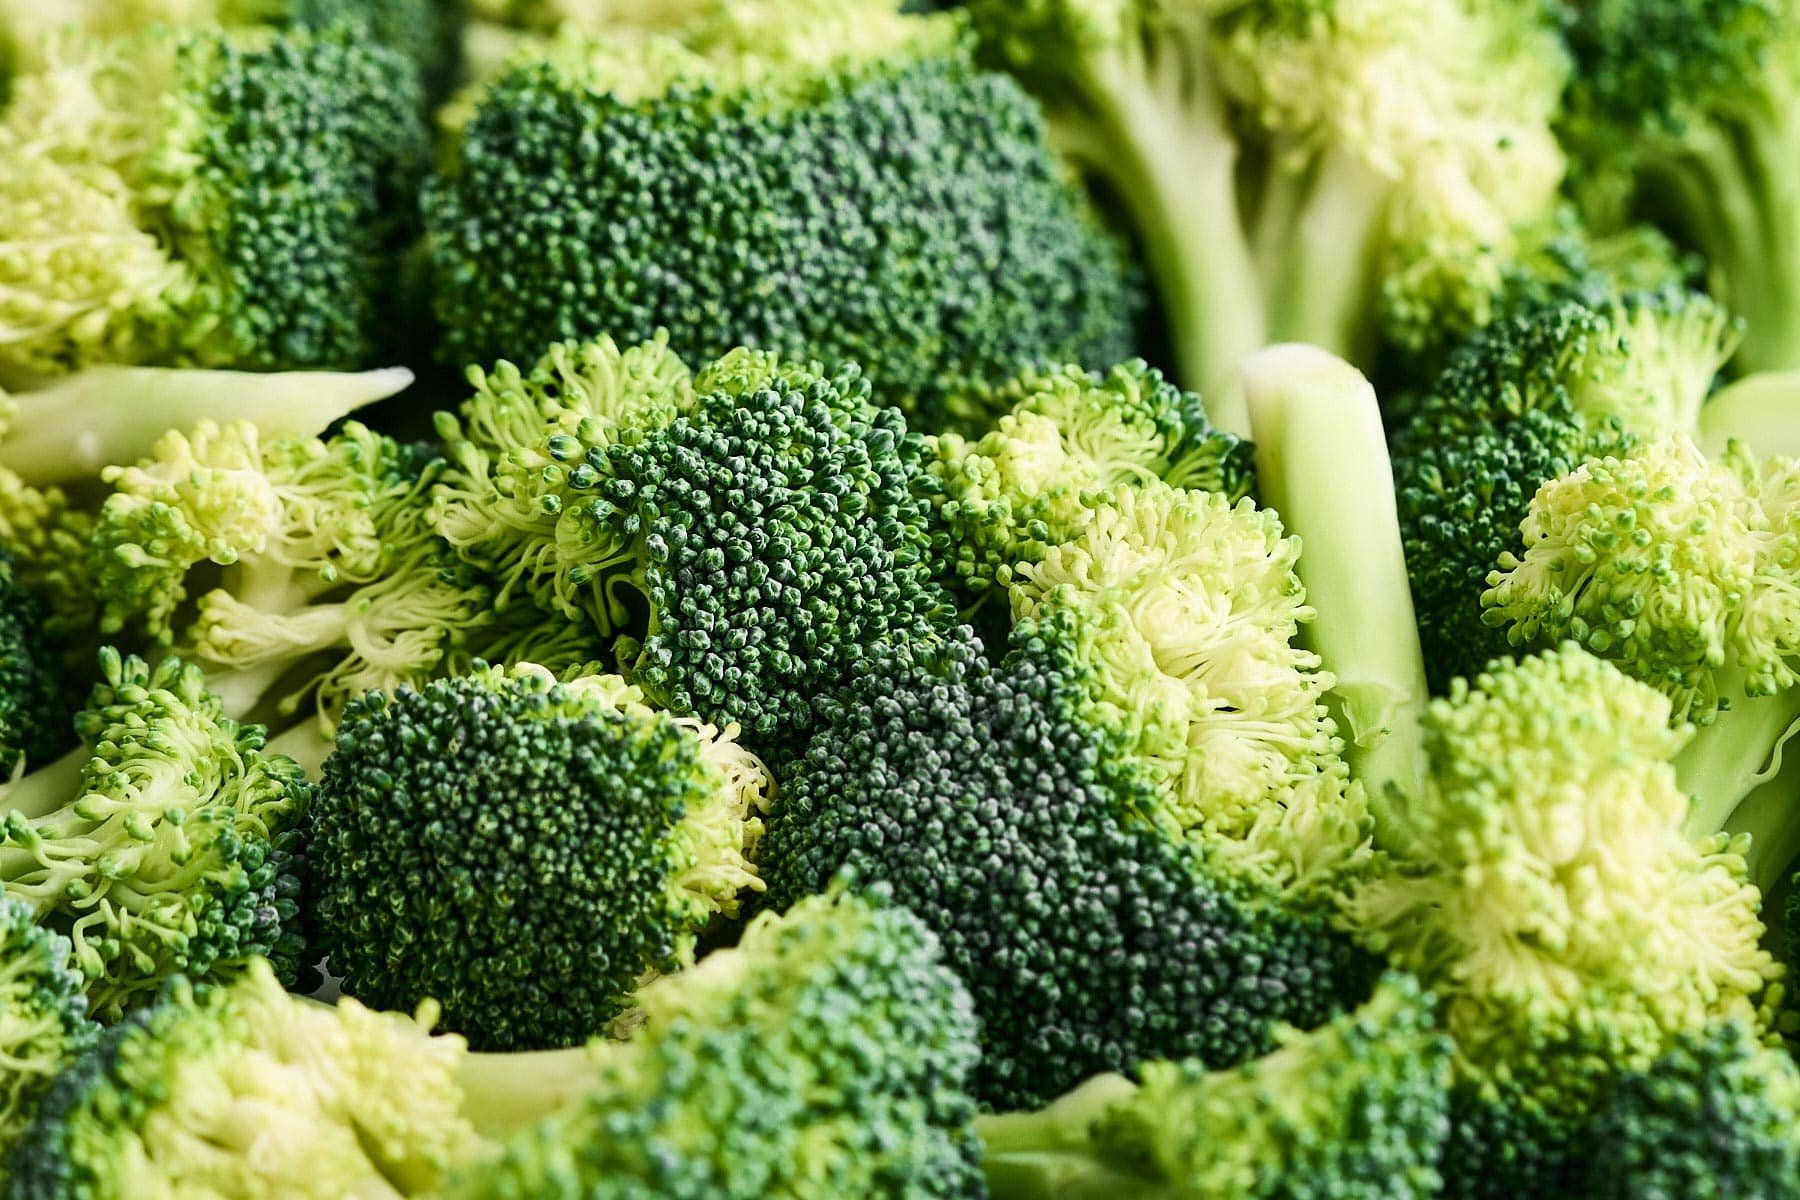 Close up of chopped broccoli florets.